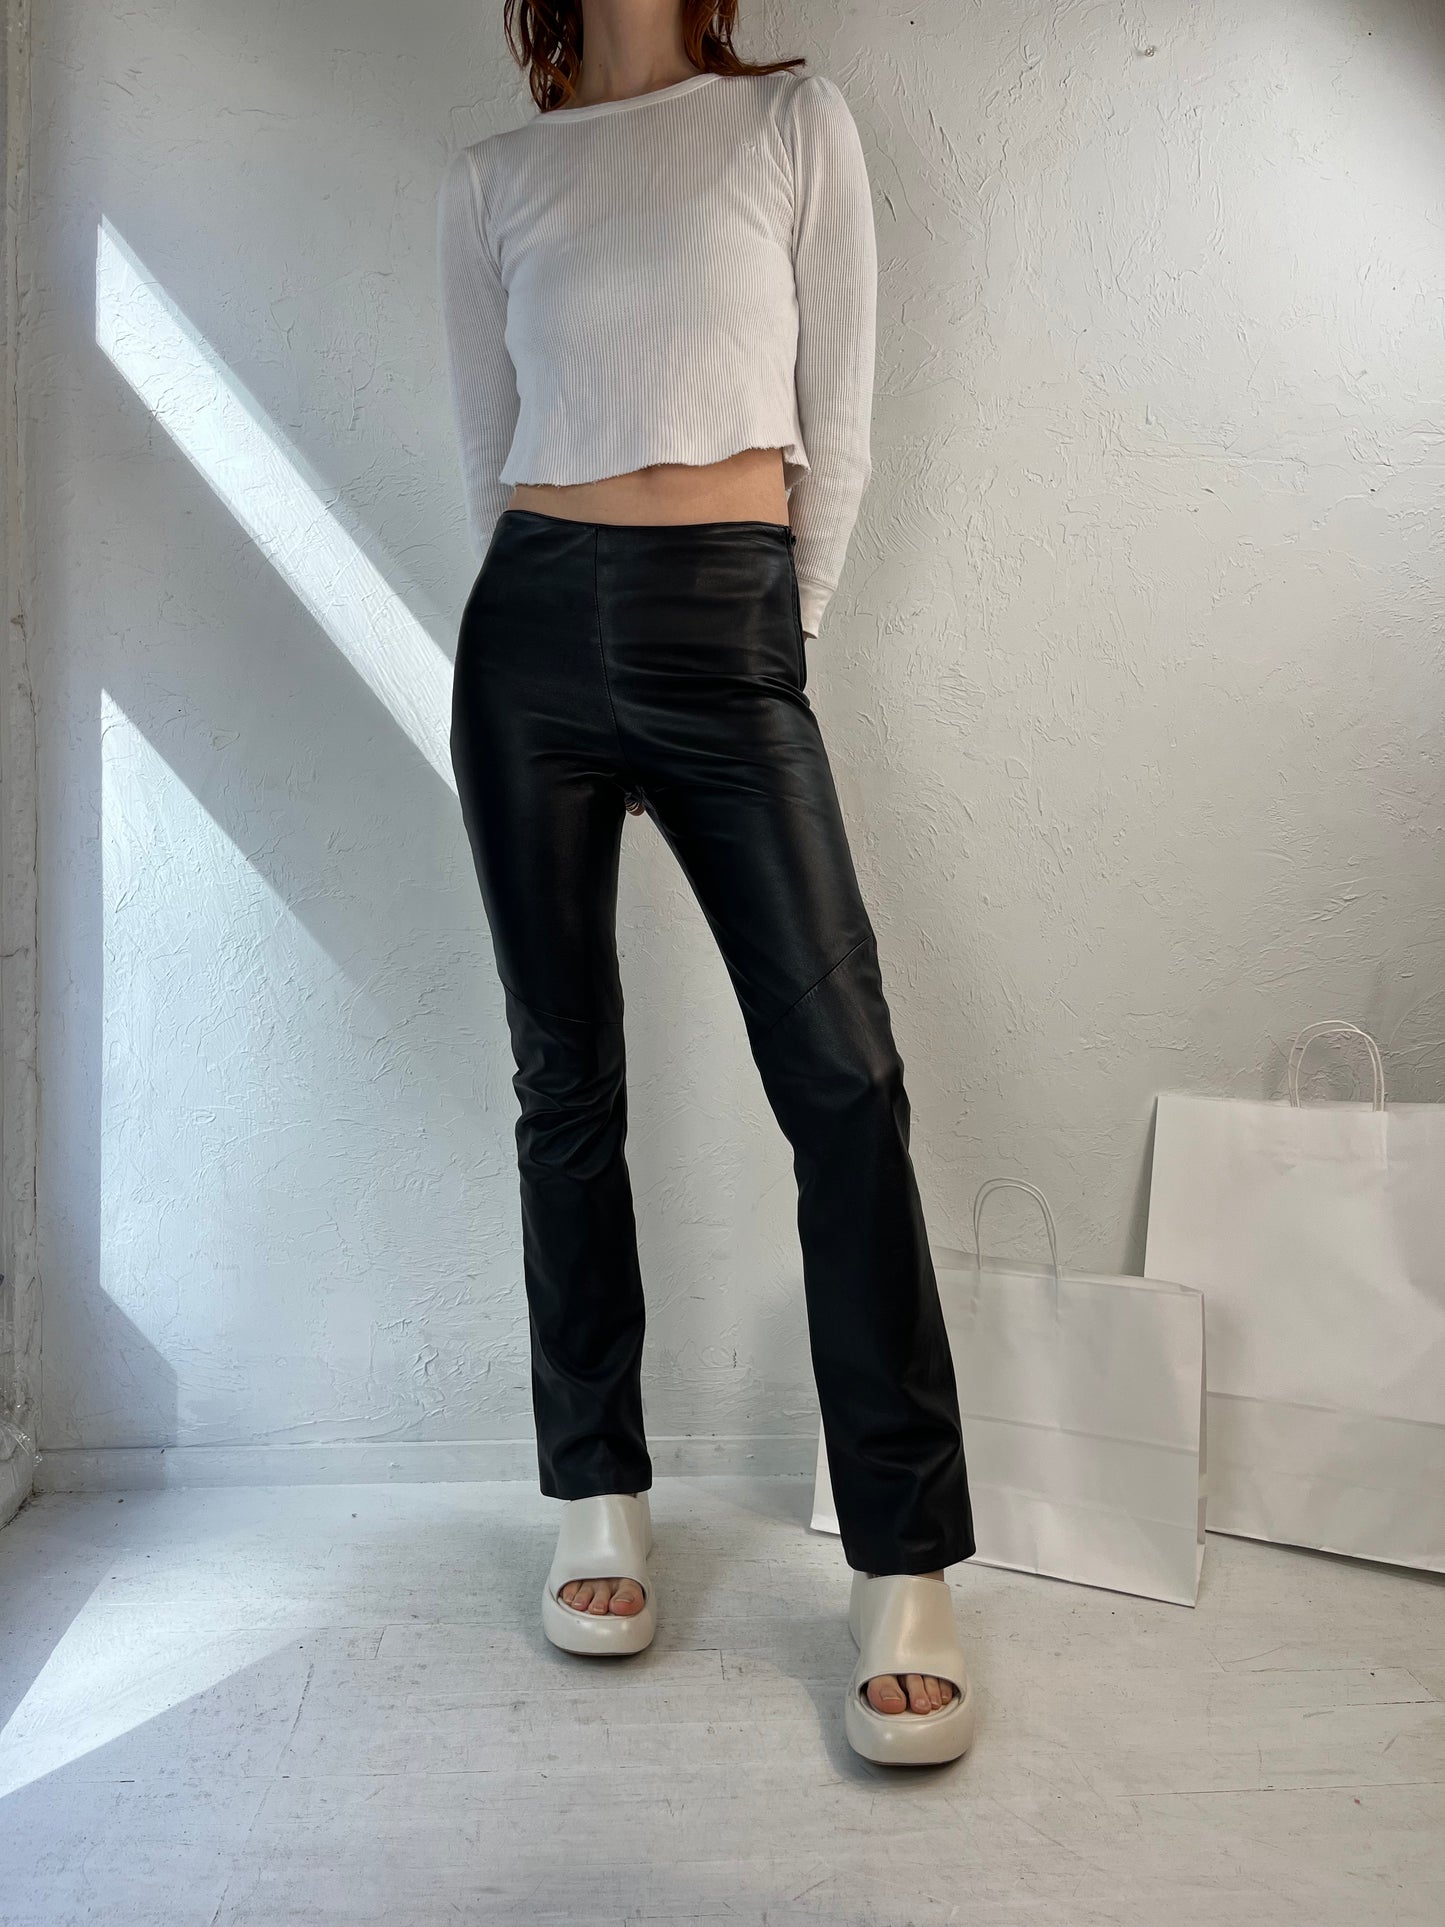 90s 'Danier' Black Leather Pants / Small